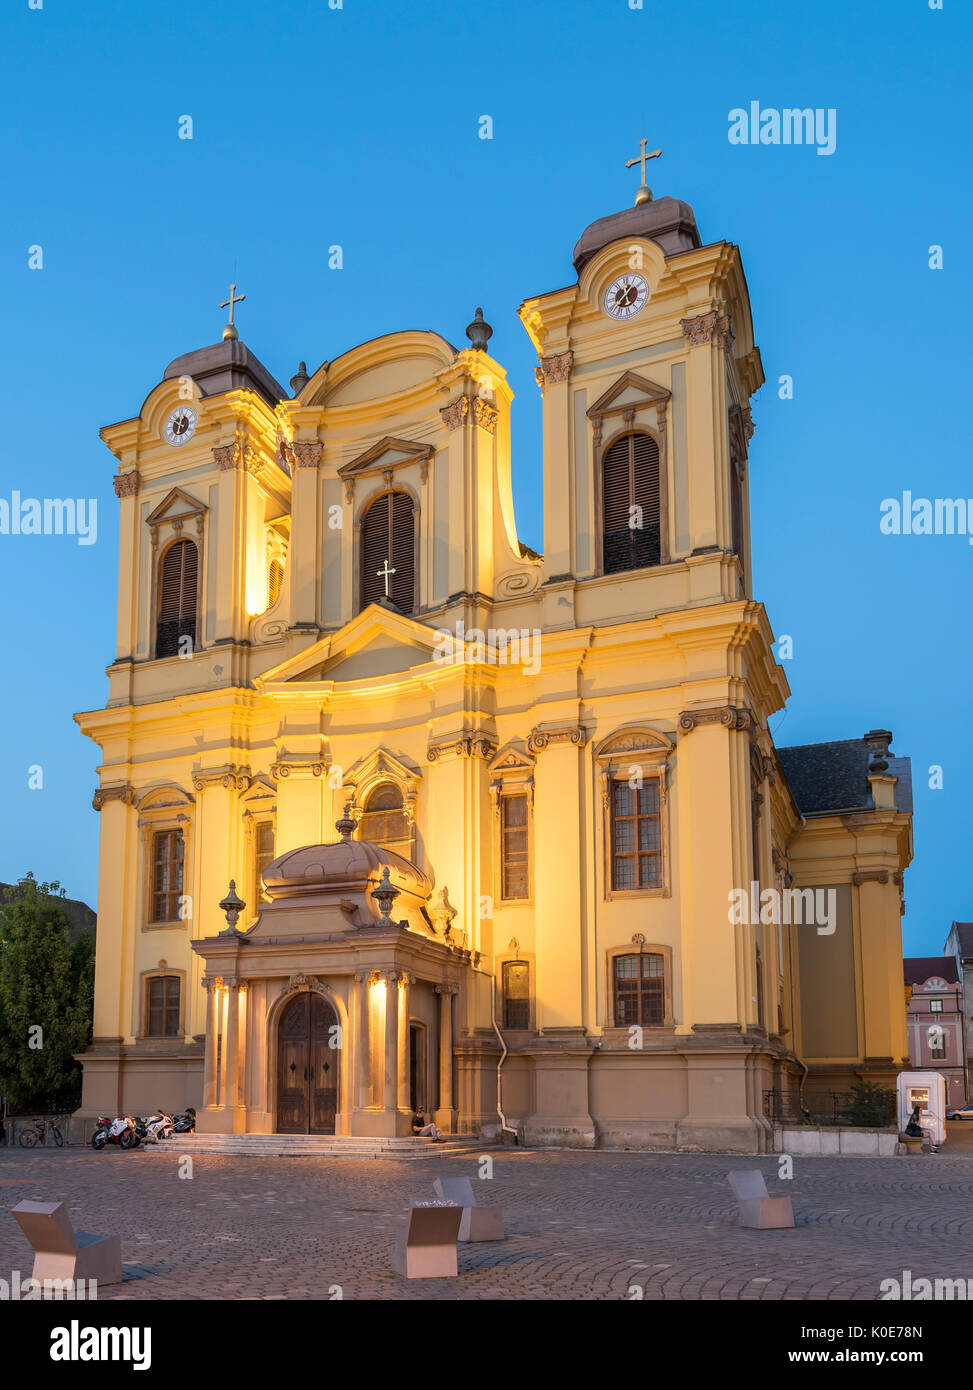 St. George's Cathedral (The Dome), Union Square, Timisoara, Romania Stock Photo